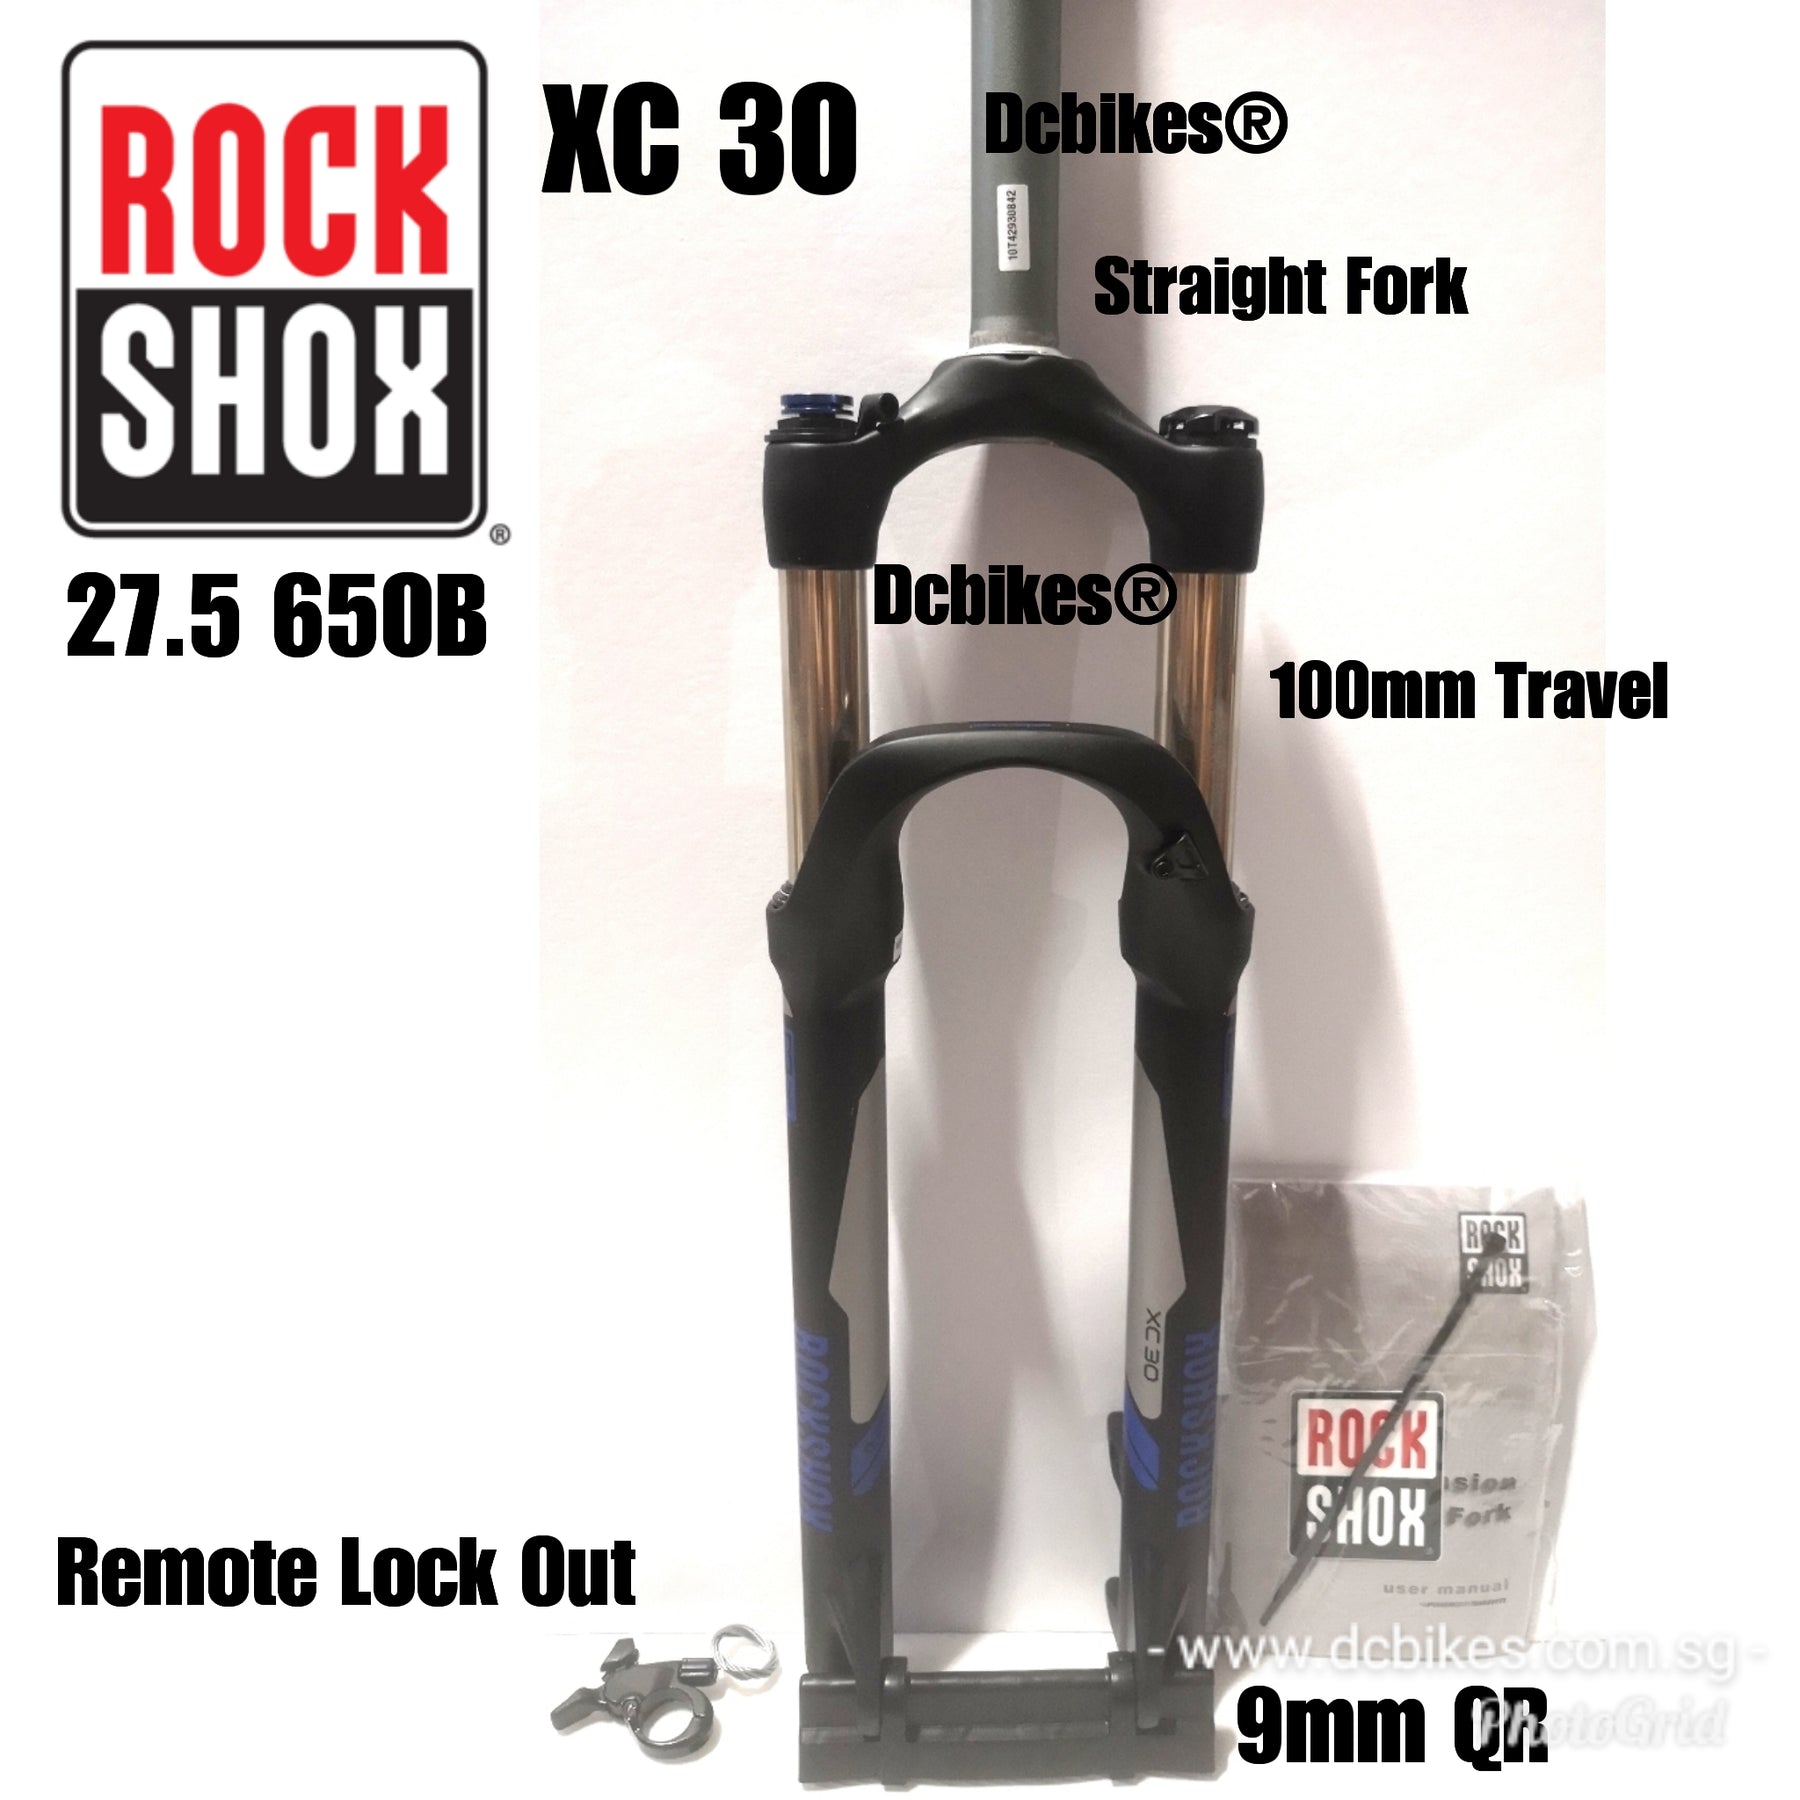 rockshox xc 30 price